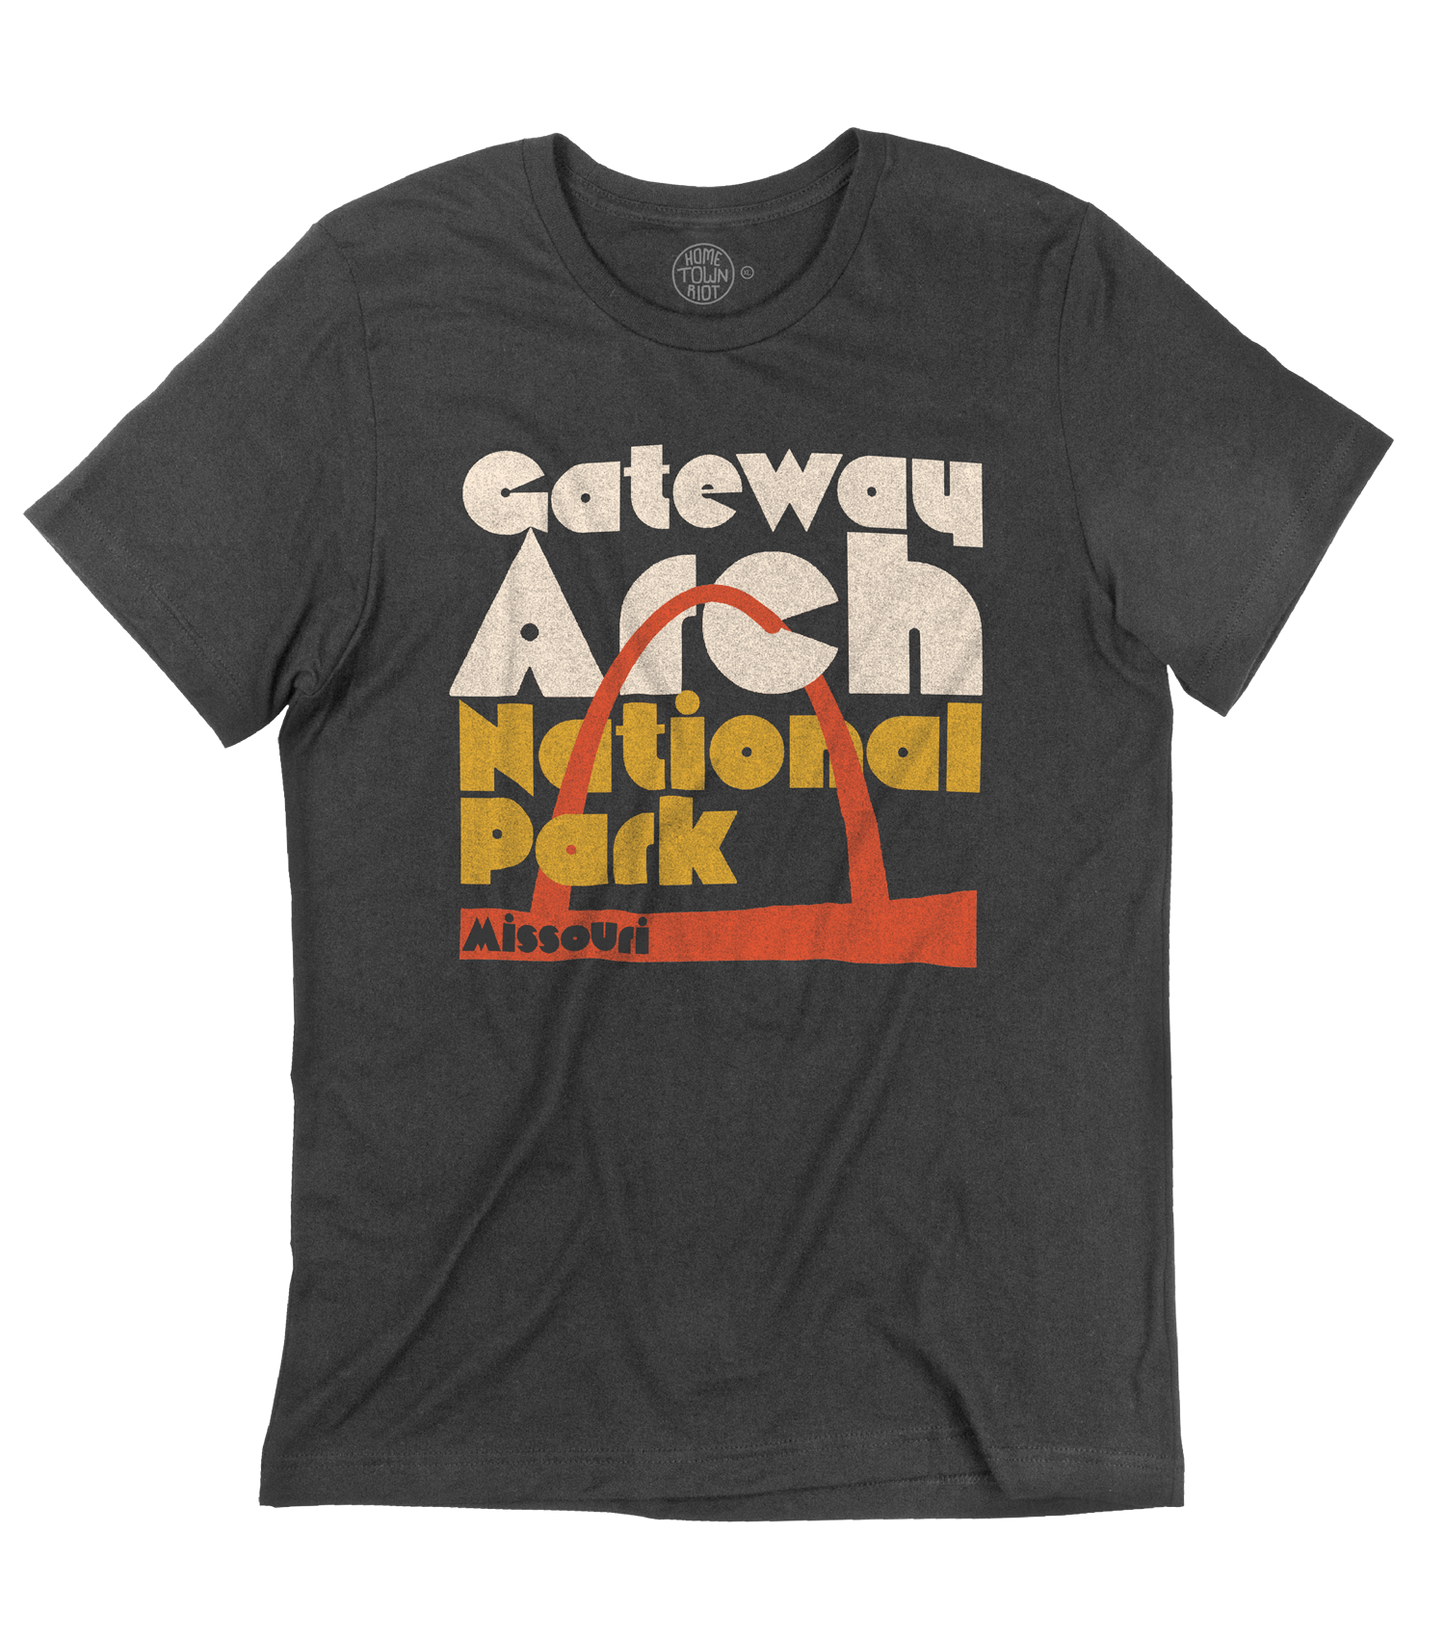 Gateway Arch National Park Shirt